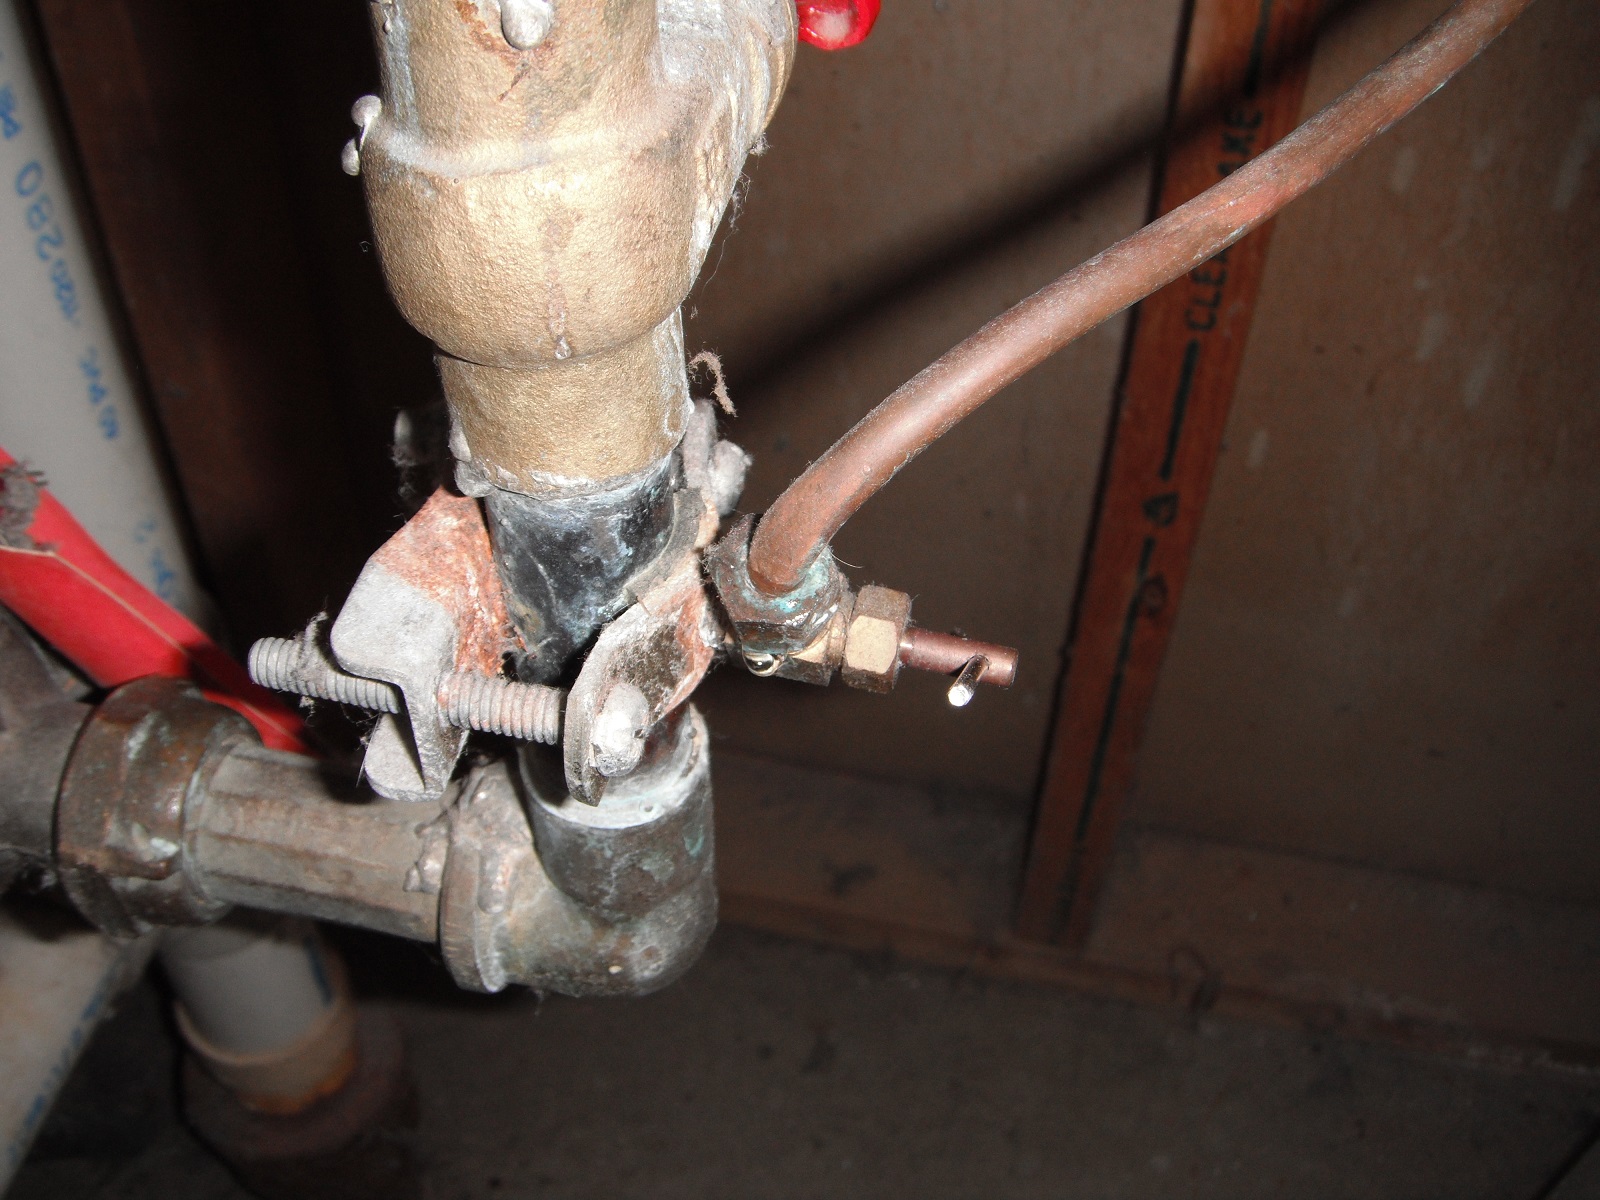 Leaking sadle water valve. "Mokena Home Inspection"